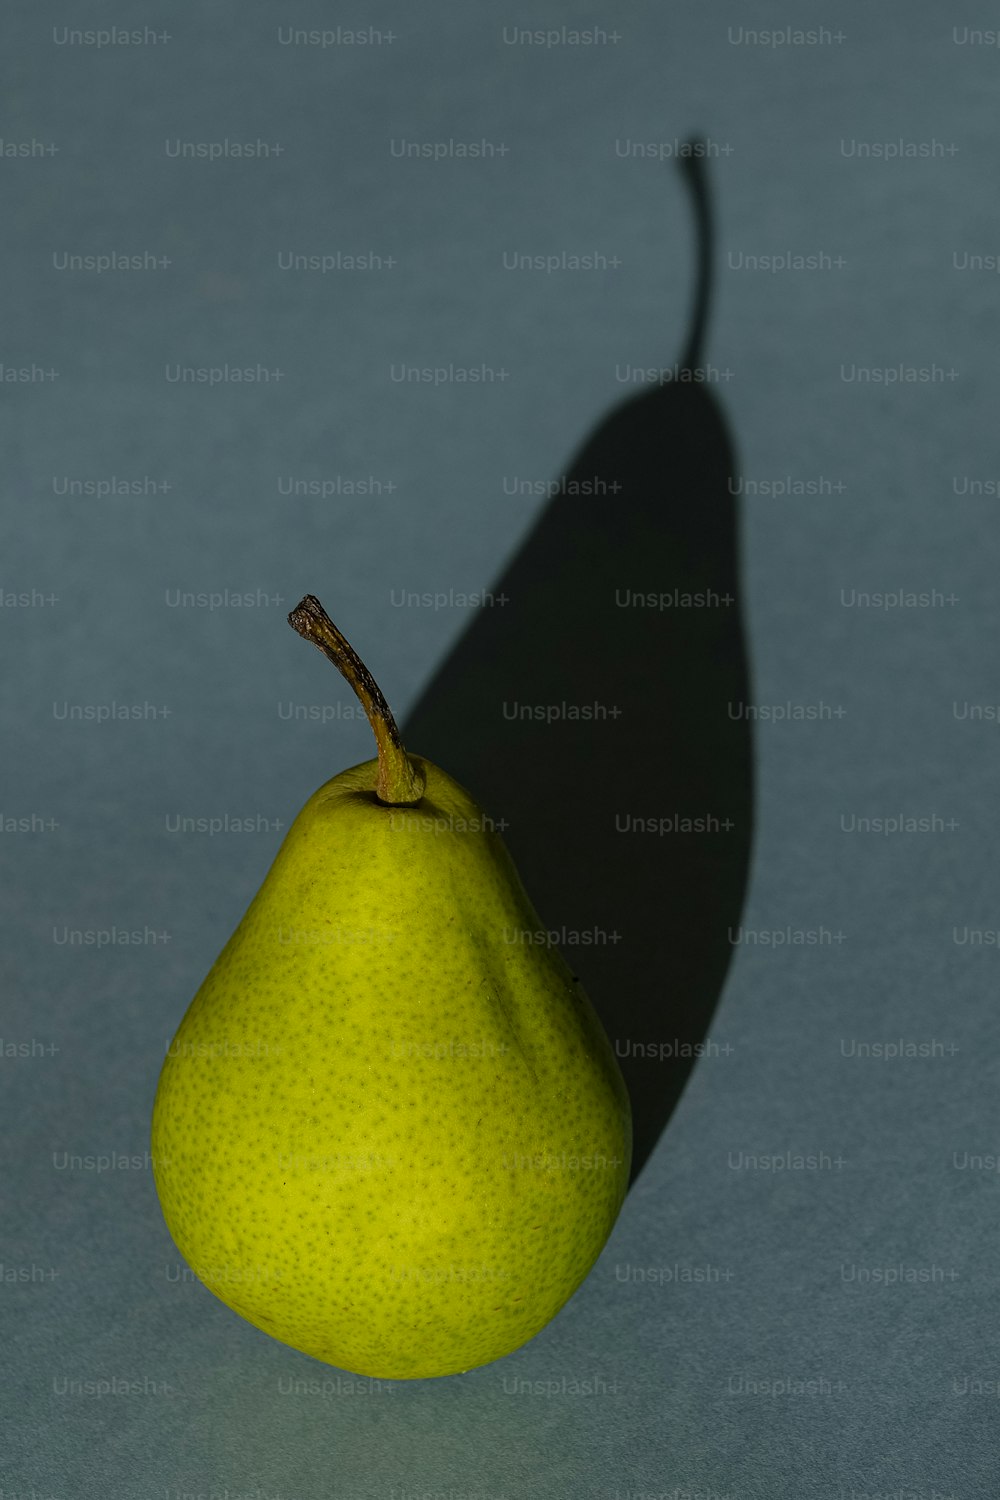 Una singola pera sta proiettando un'ombra su una superficie blu